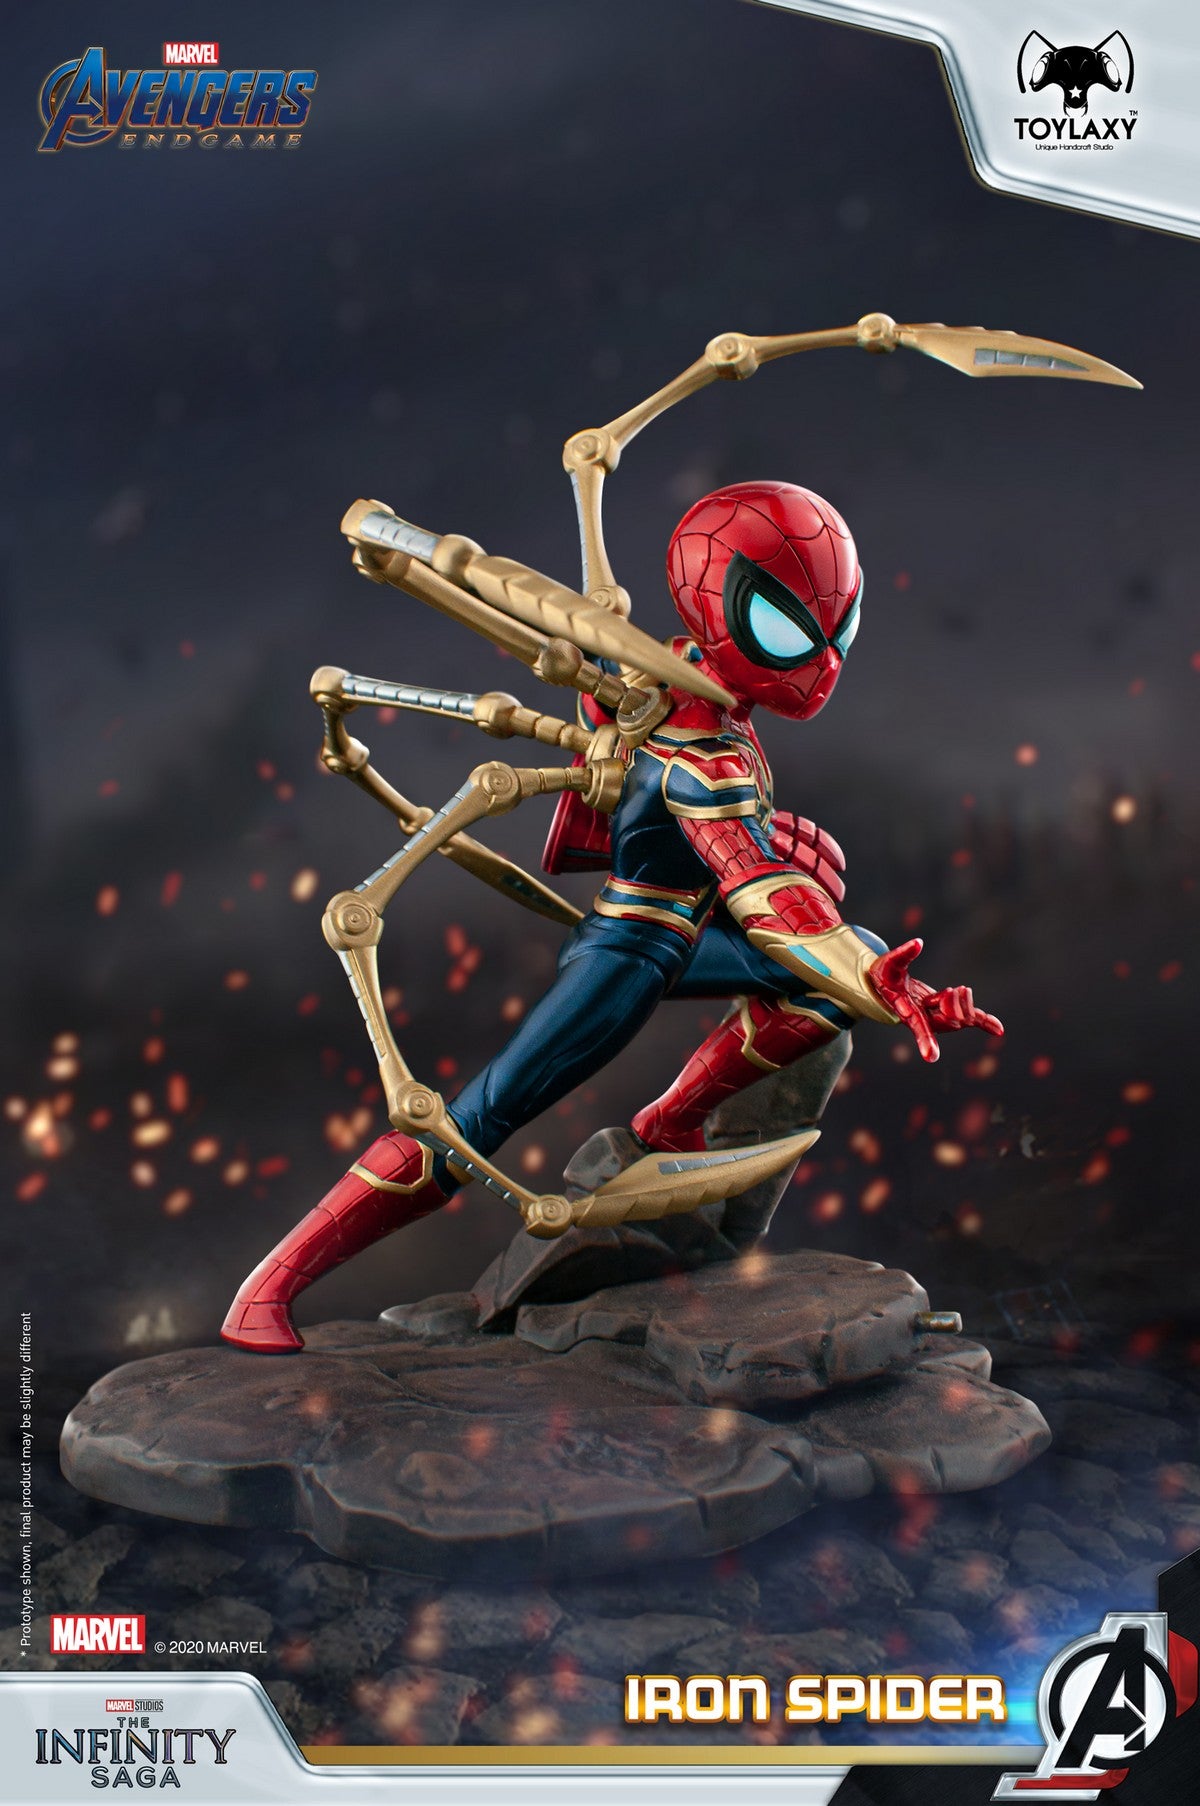 漫威復仇者聯盟：蜘蛛俠--鐵甲蜘蛛特別版正版模型手辦人偶玩具終局之戰版 Marvel's Avengers: Iron Spider Spider Man Official Figure Toy power in endgame side